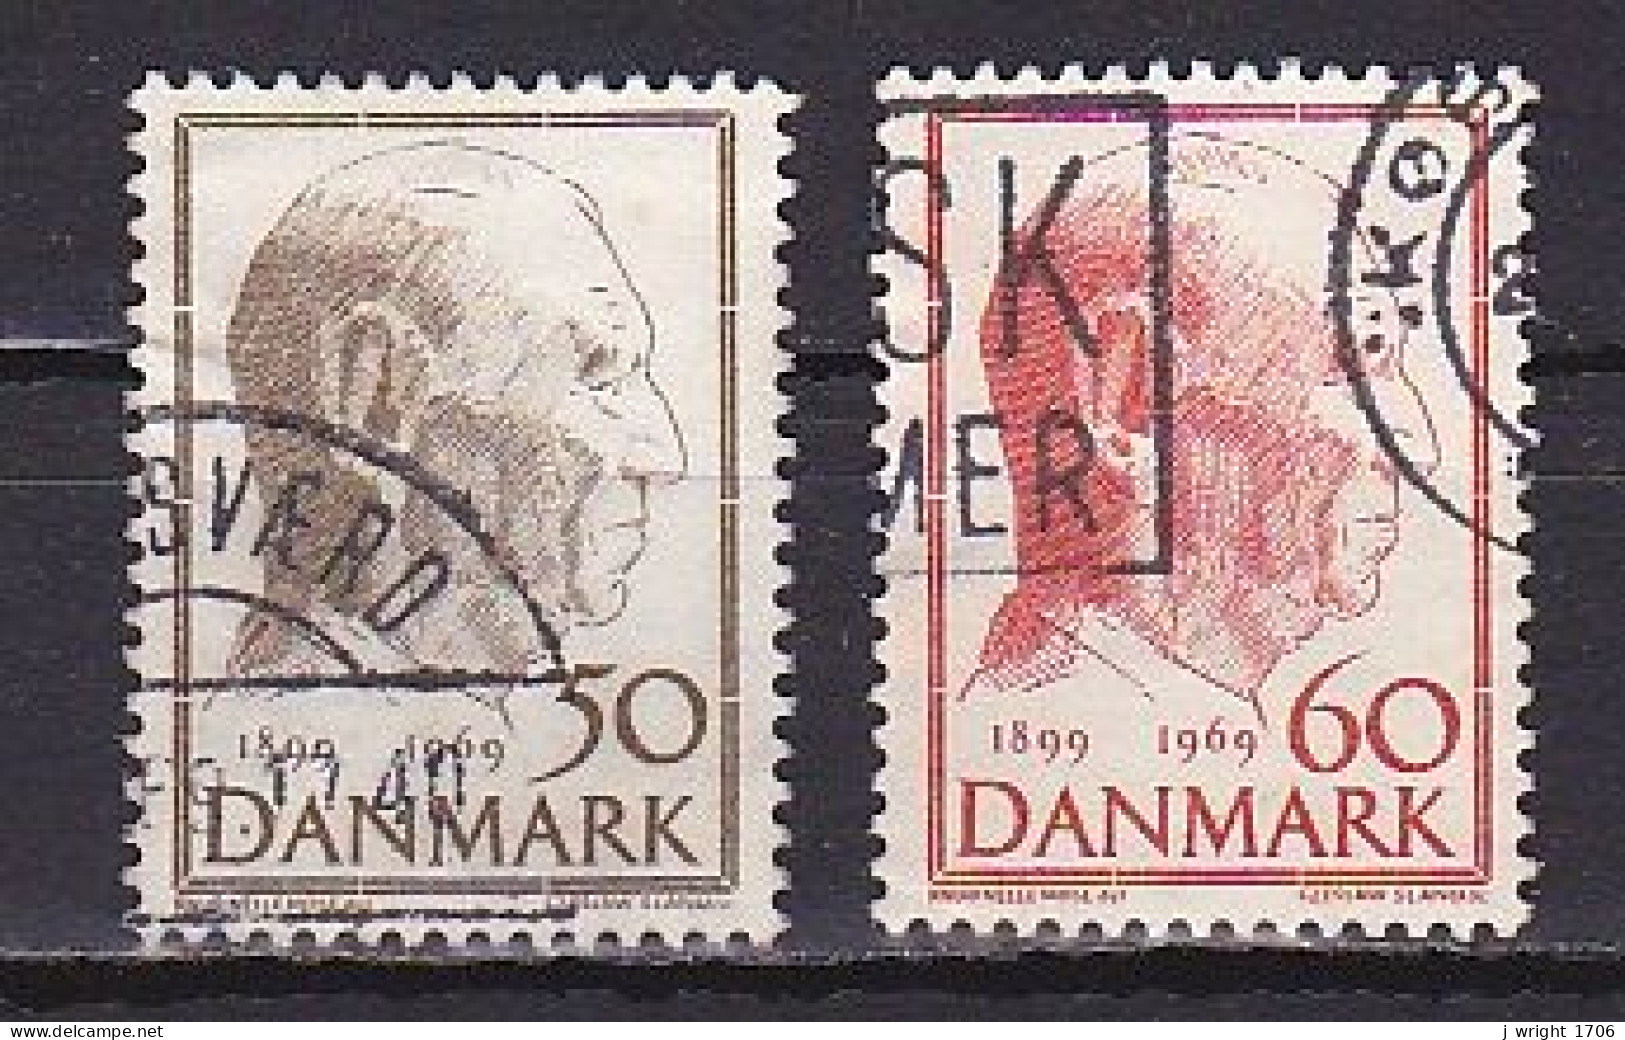 Denmark, 1969, King Frederik IX 70th Birthday, Set, USED - Usati